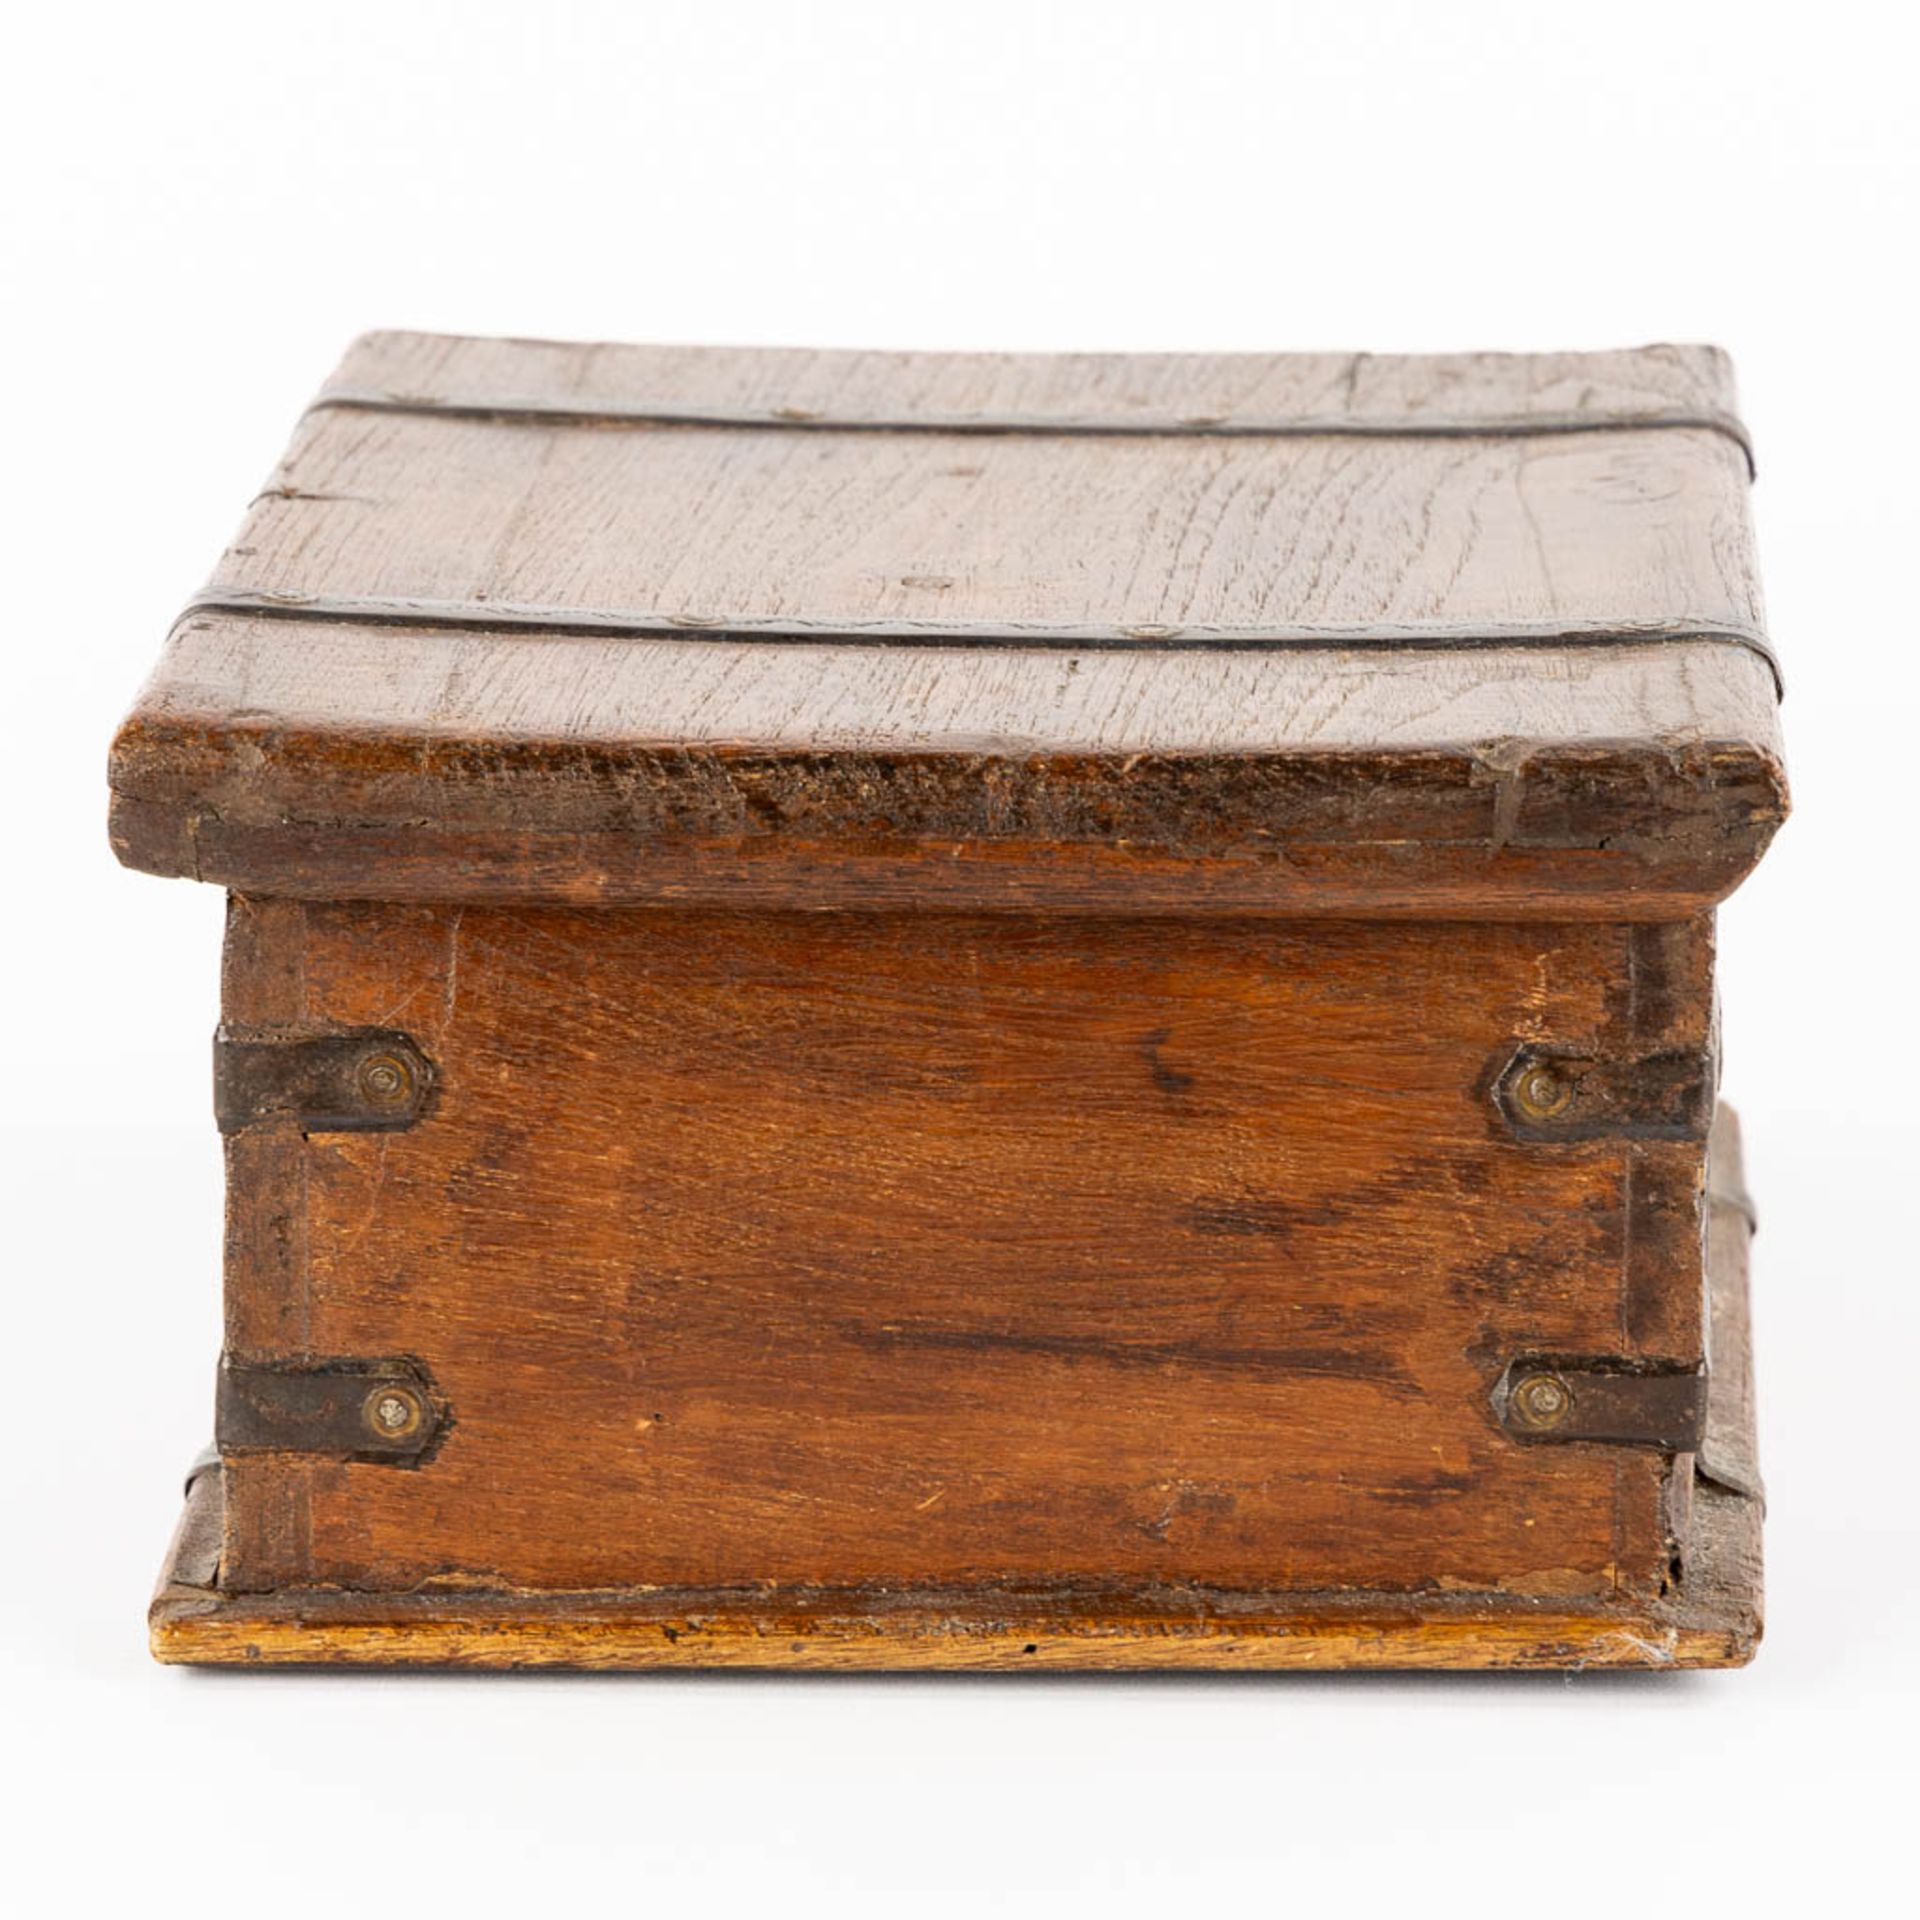 An antique money box or storage chest, oak and wrought iron, 19th C. (L:23 x W:31 x H:13 cm) - Bild 4 aus 13